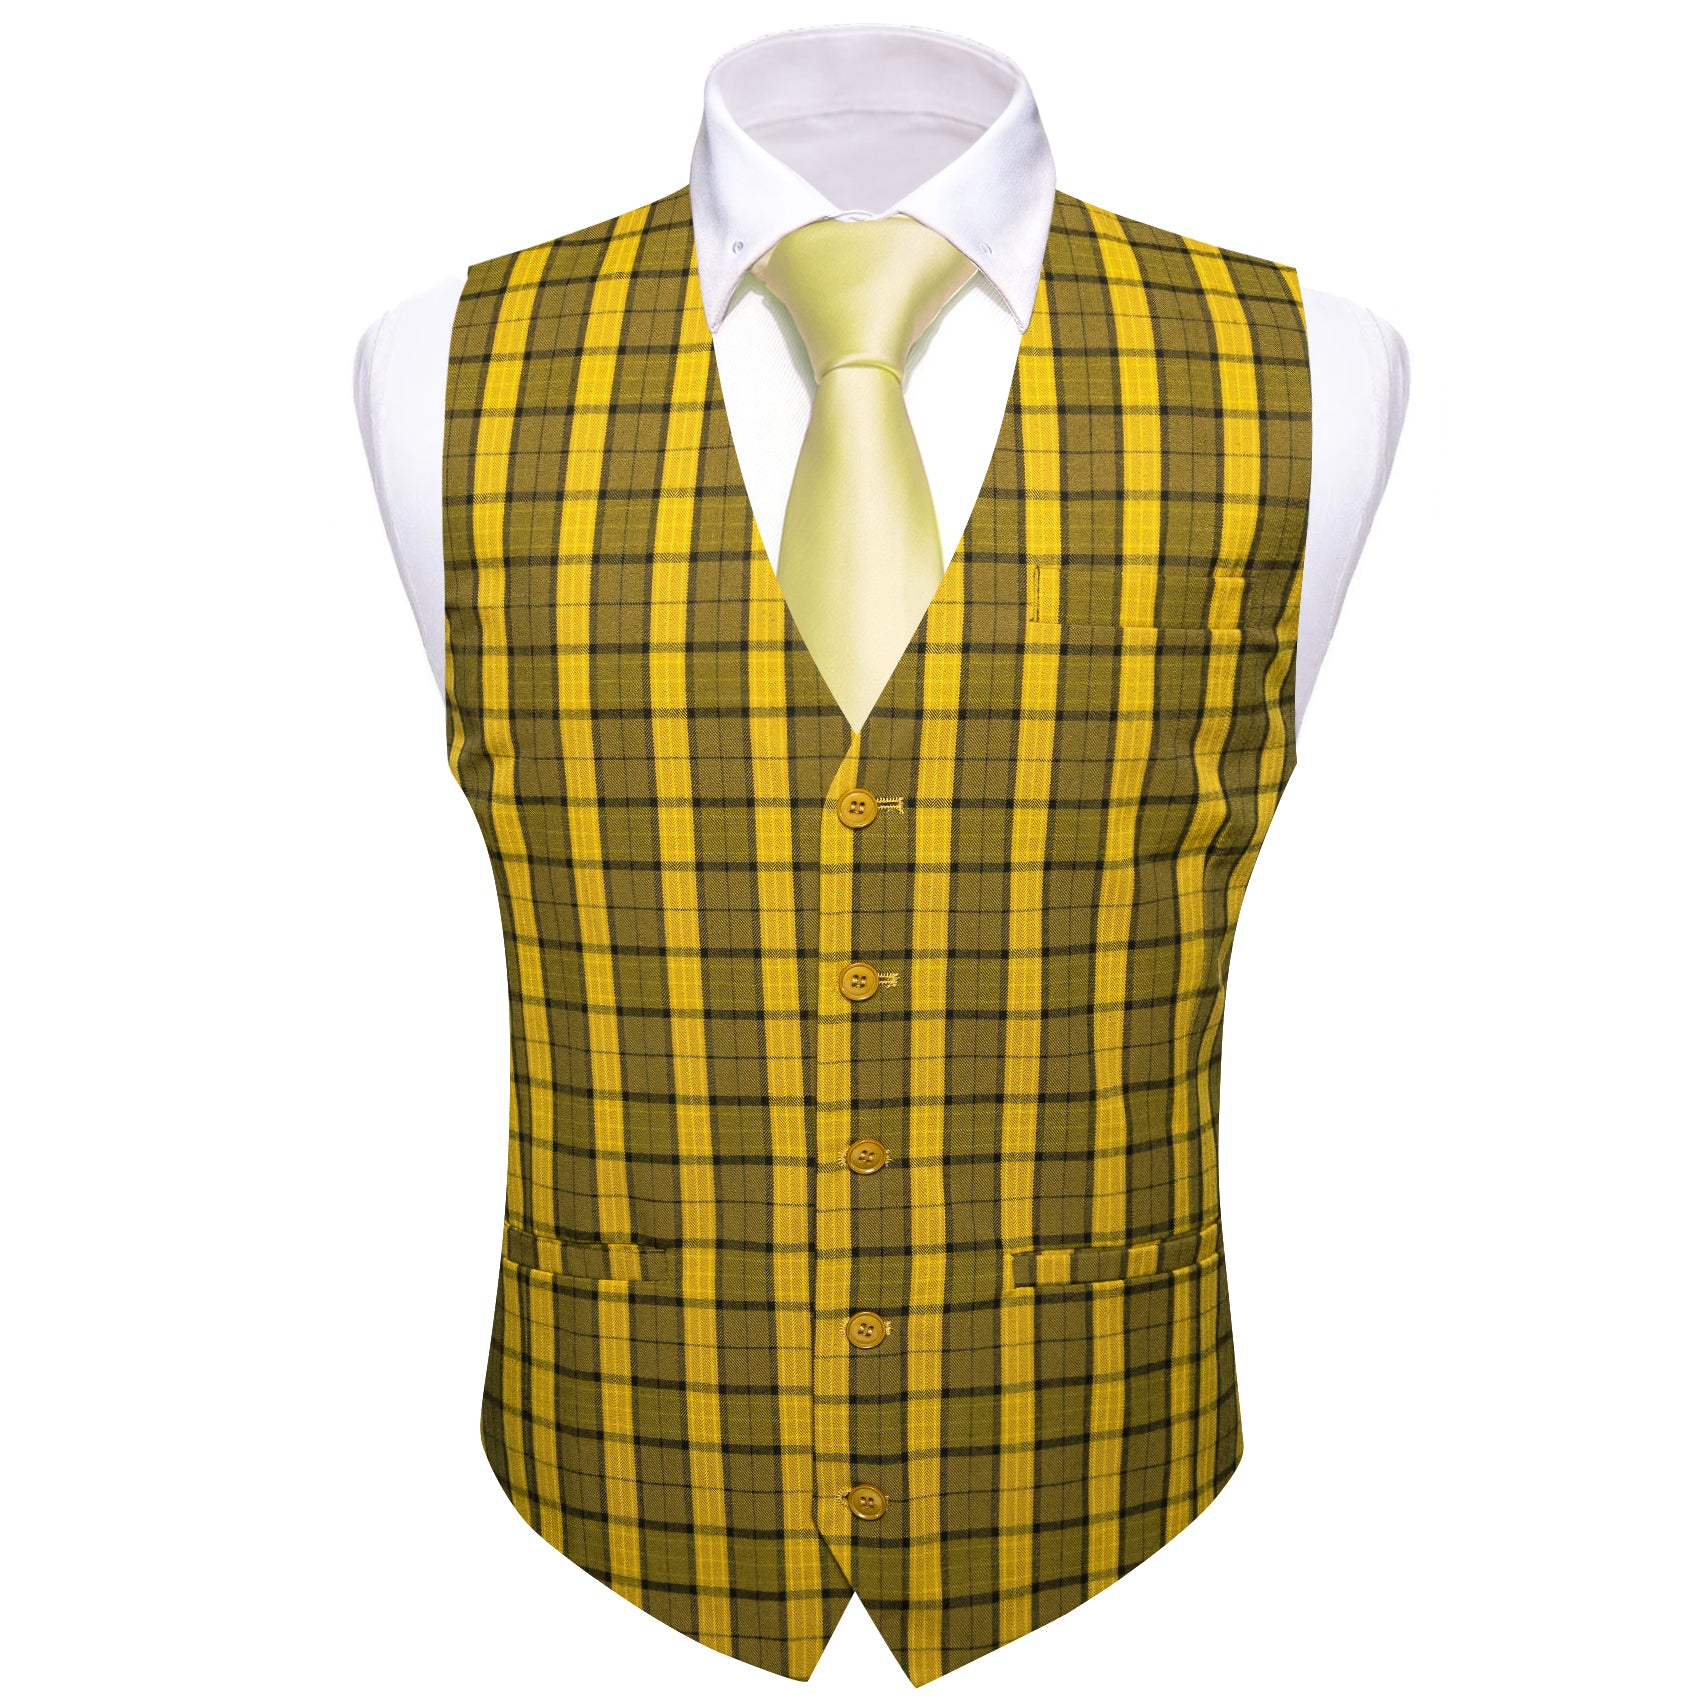 Barry.wang Luxury Green Yellow Plaid Waistcoat Vest